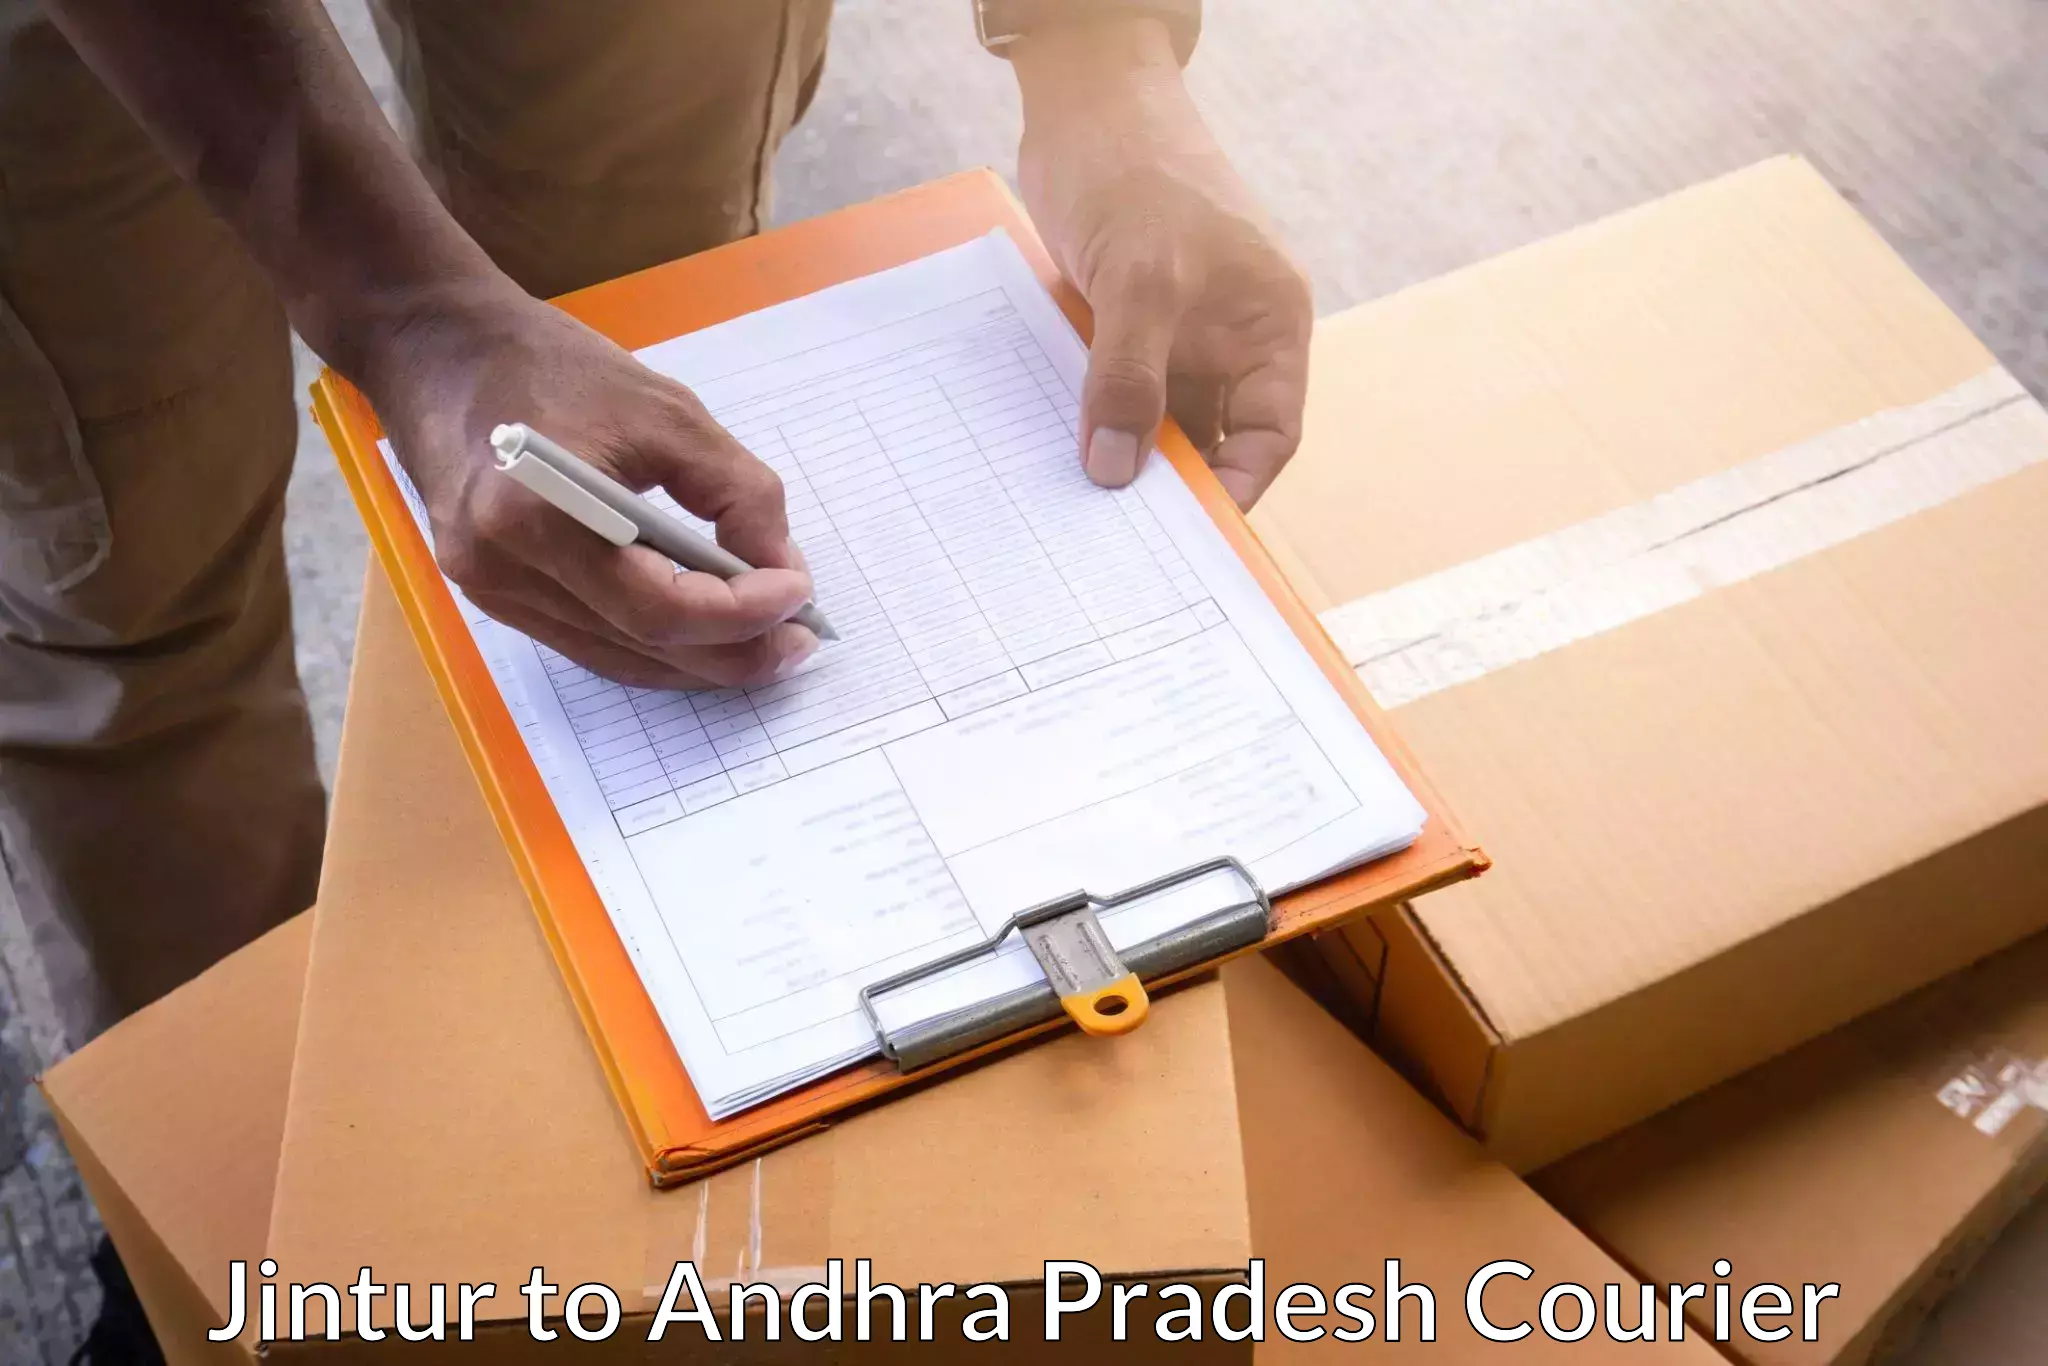 Courier service innovation Jintur to Sri City